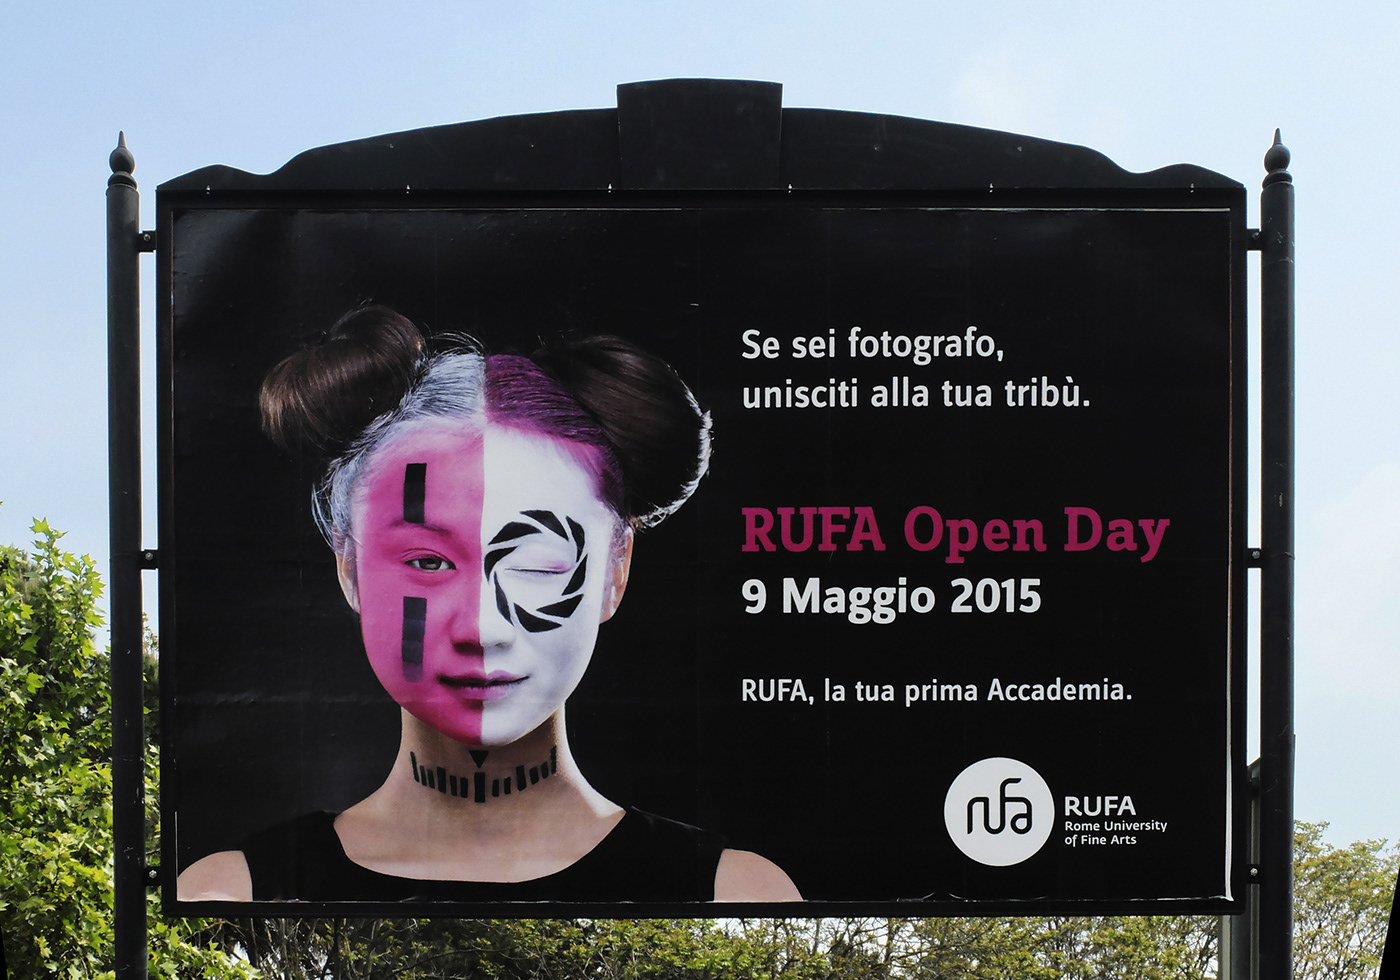 campaigns Events Open Day rufa tribu Rome Advertising  art campaign school